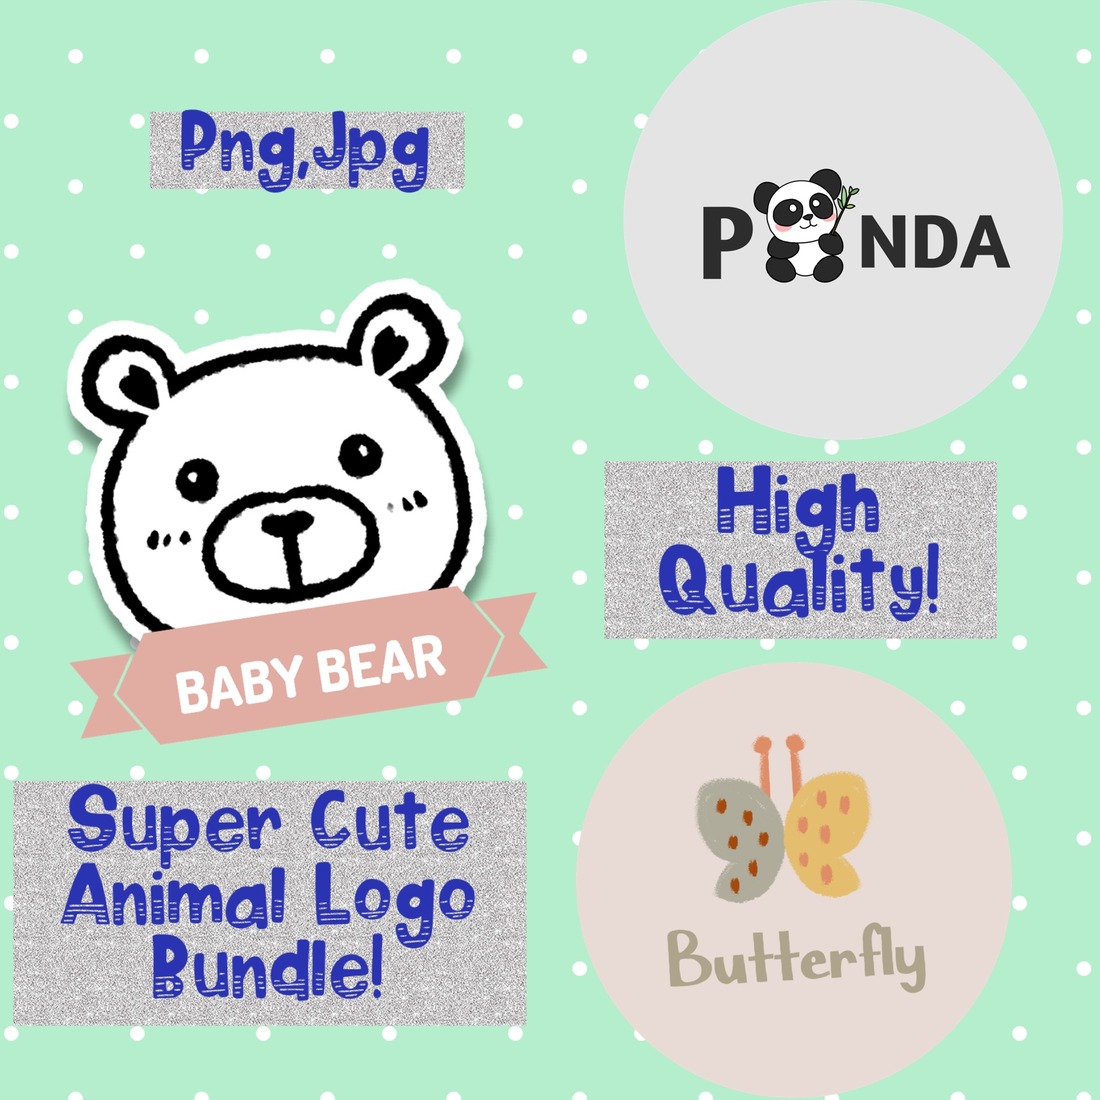 Super Cute Animals Logo/Sticker Bundle (png,jpg) cover image.